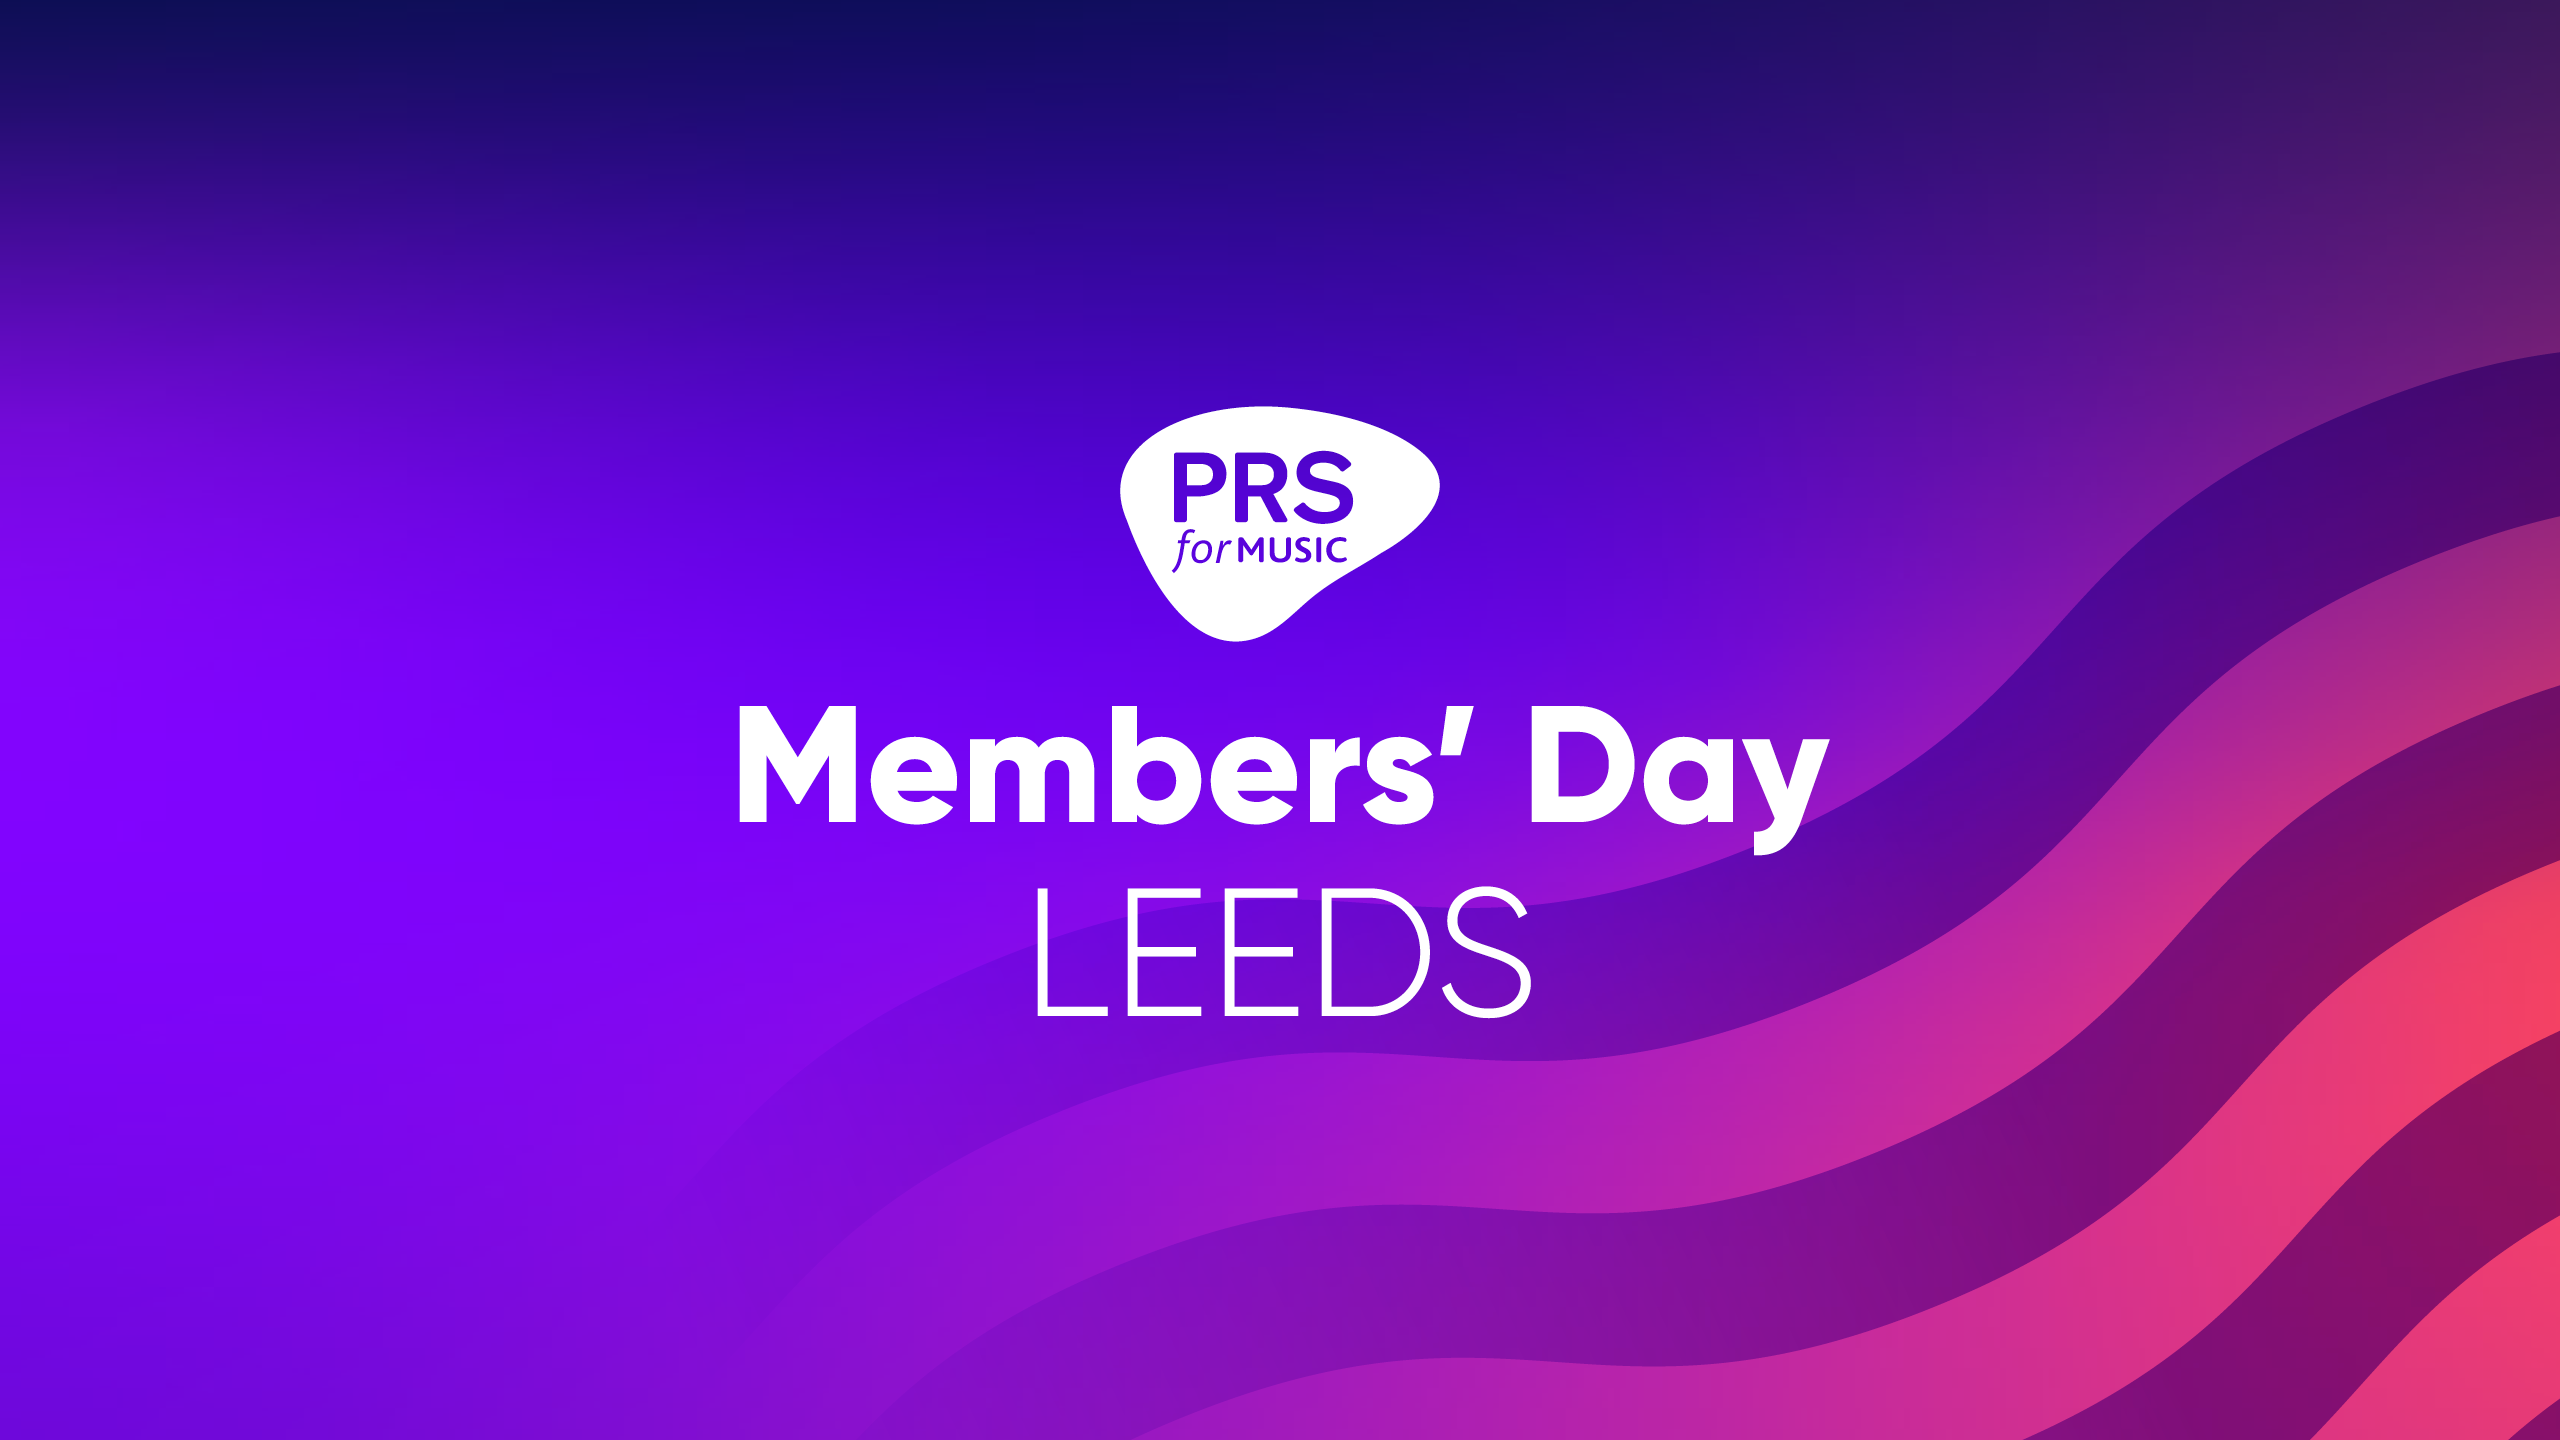 Members' Day Leeds